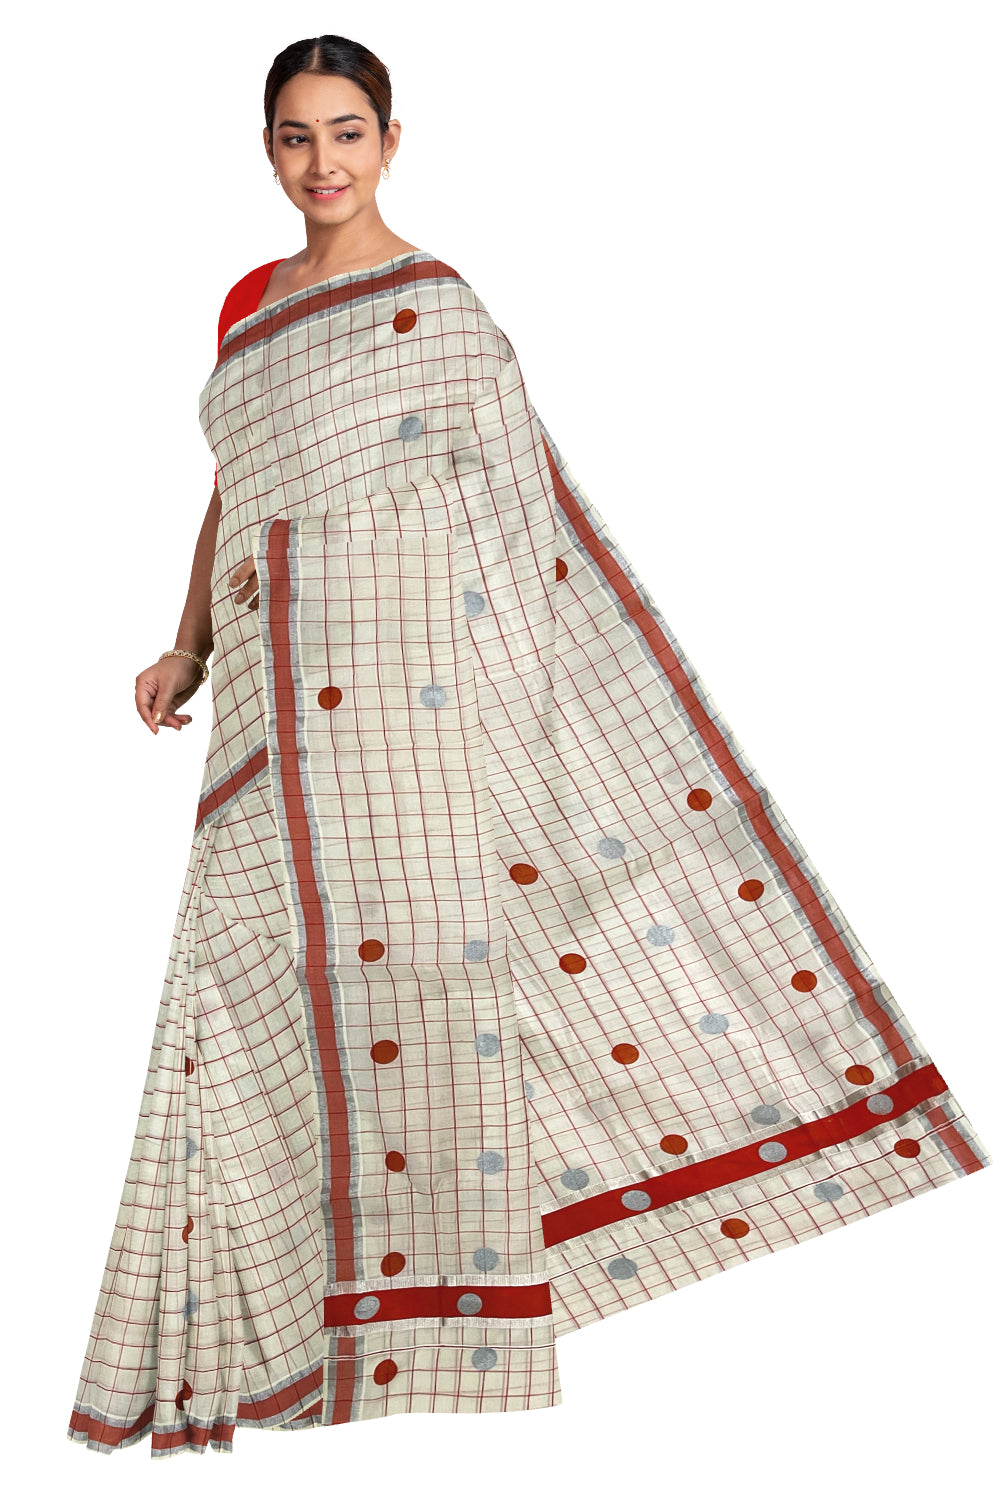 Kerala Pure Cotton Check Designs Saree with Silver and Orange Polka Prints